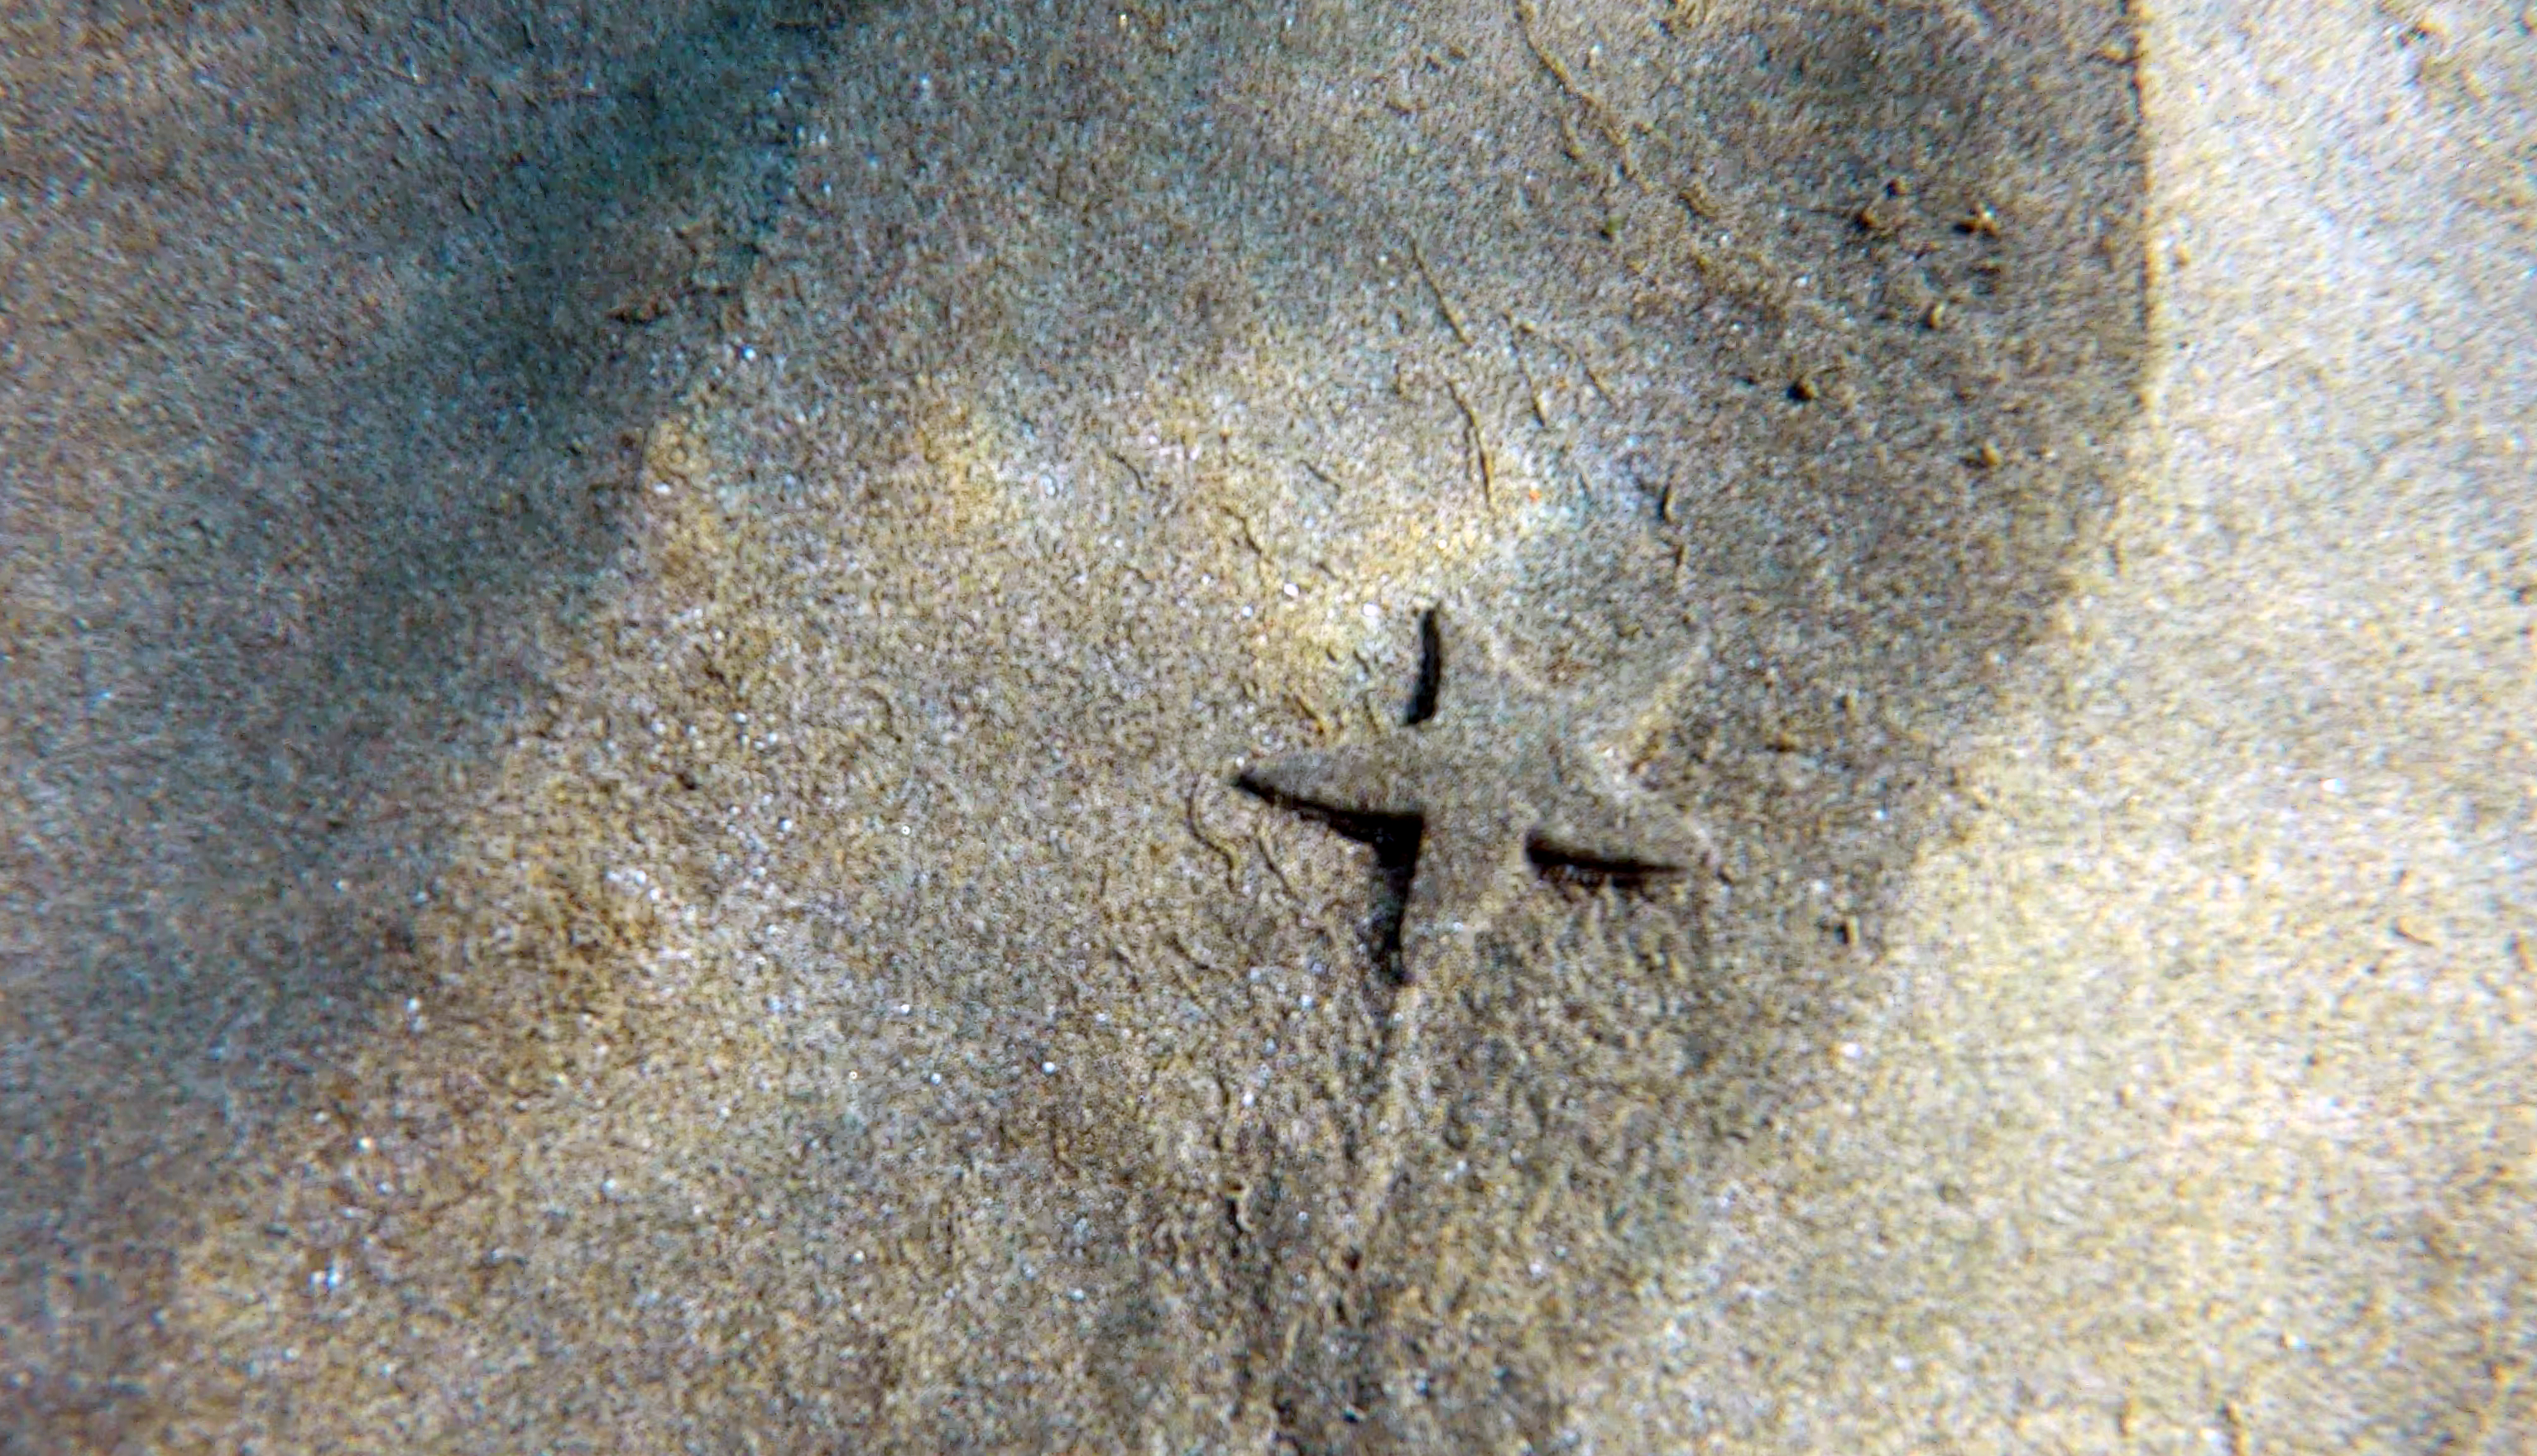 Starfish Astropecten jonstoni Pettine di mare Stella di Jonston www.intotheblue.it